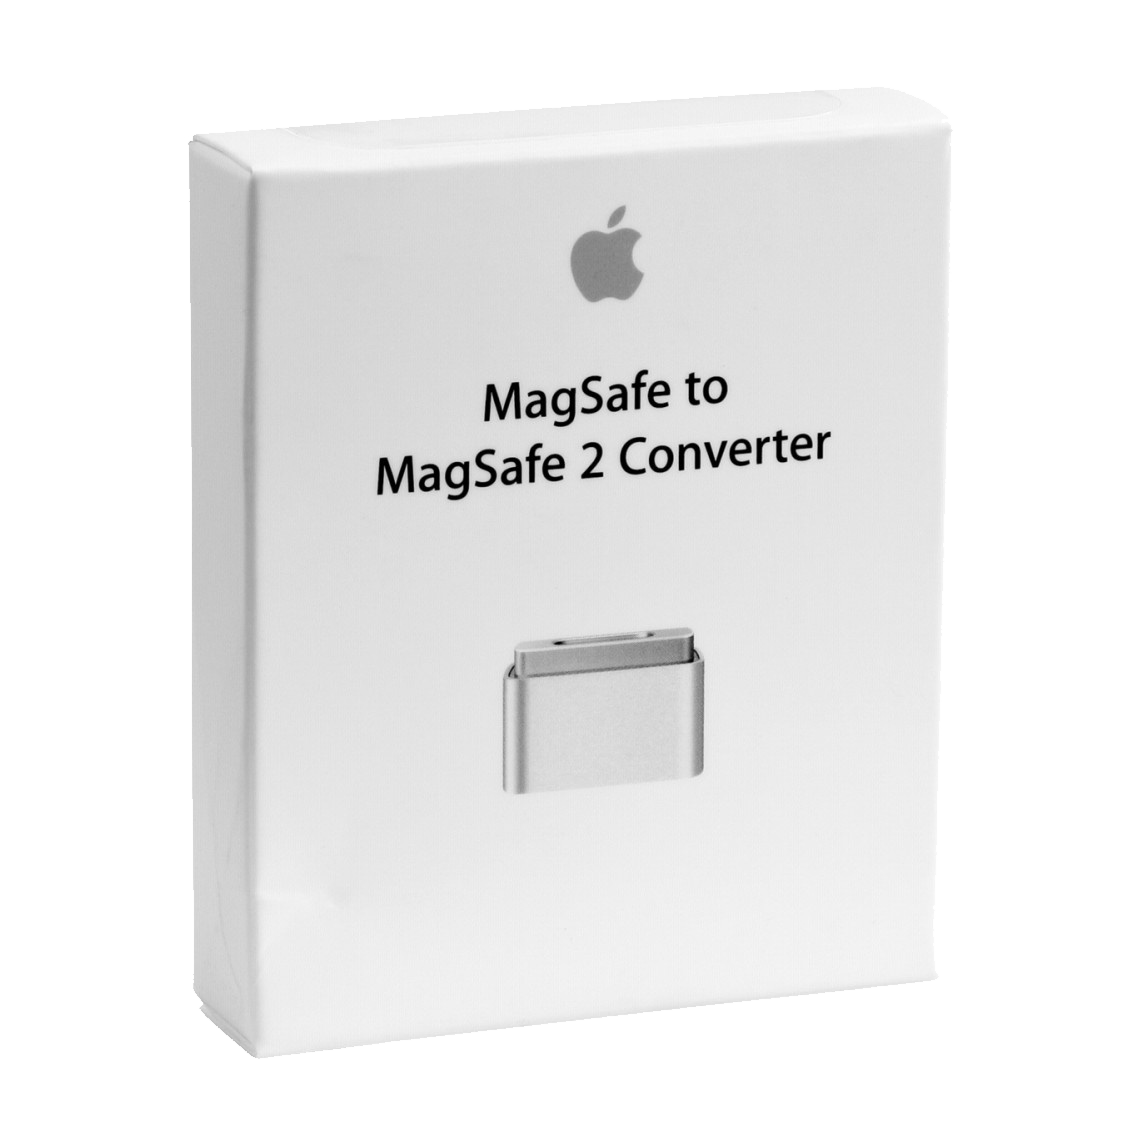 Refurbished MagSafe to MagSafe 2 Converter - test-product-media-liquid1